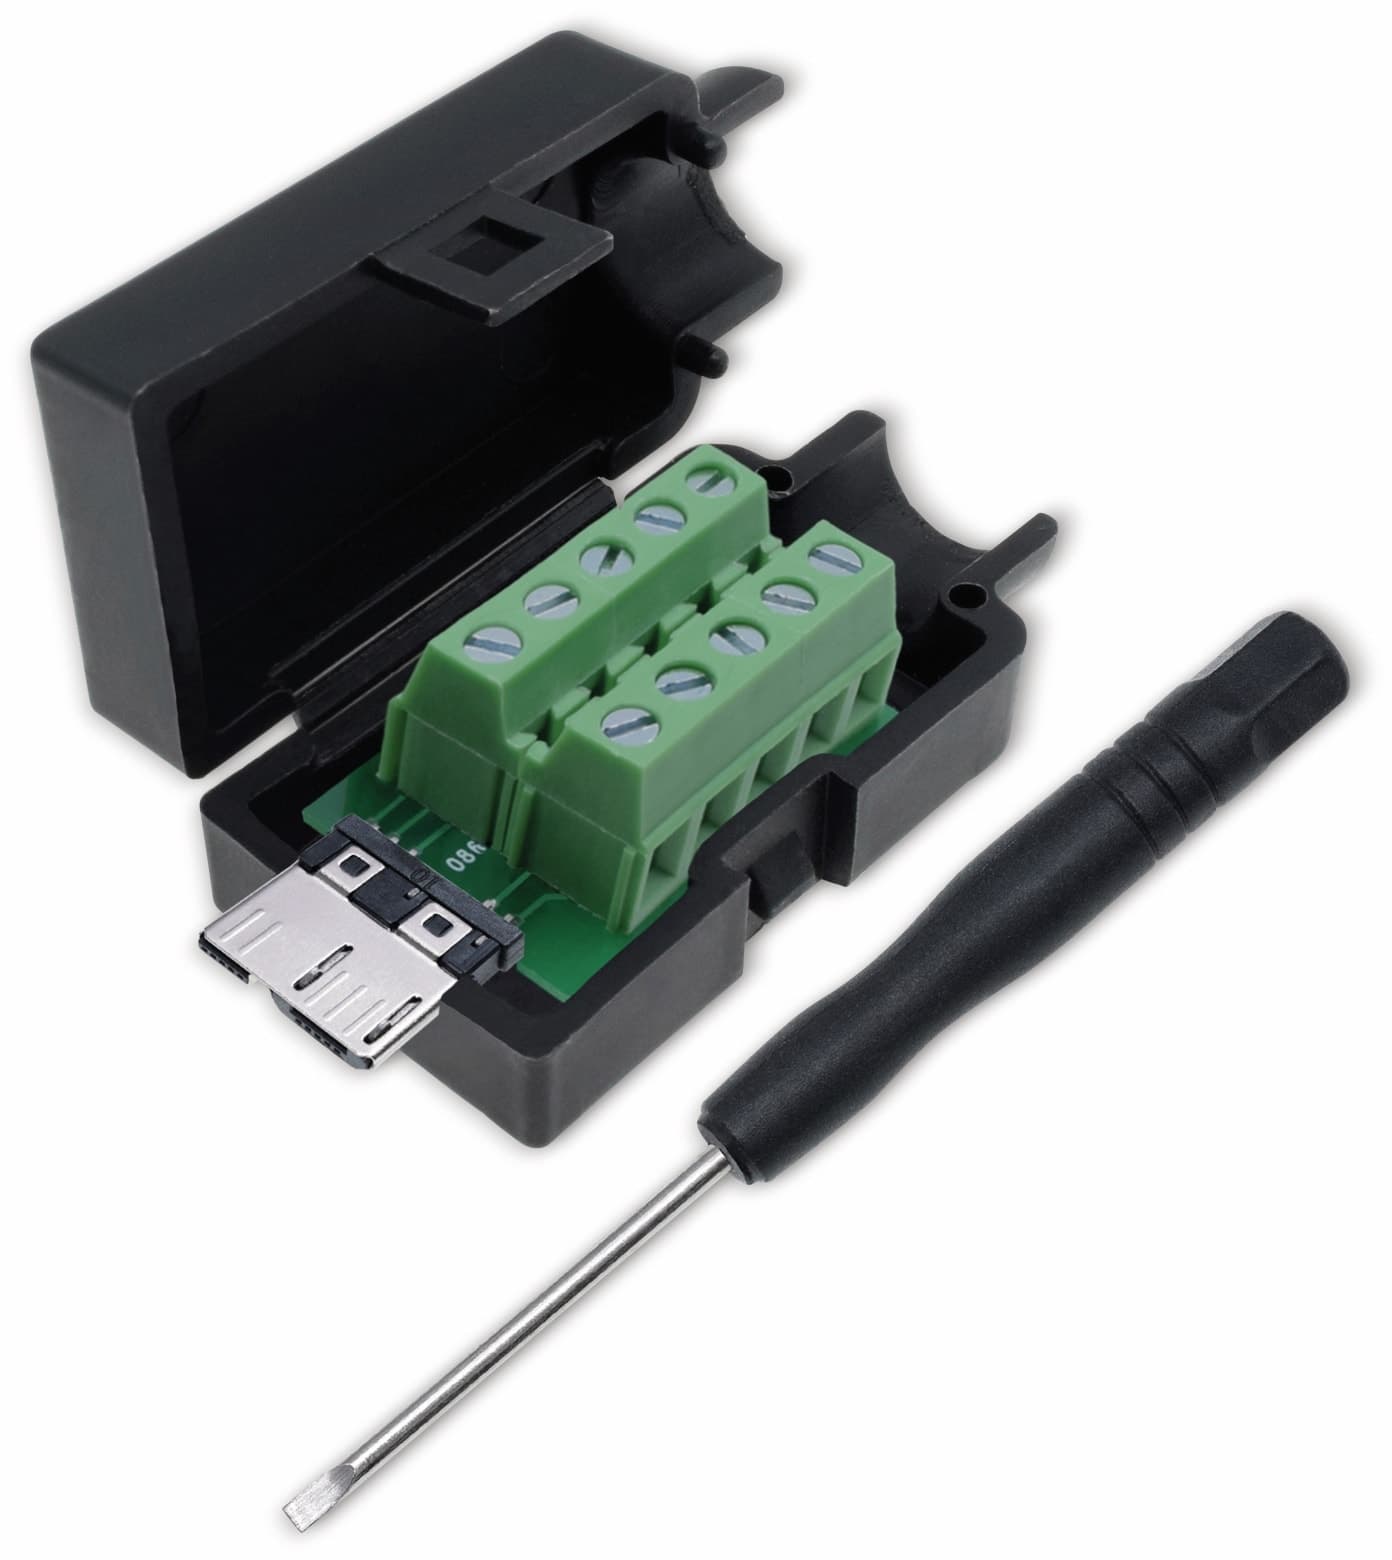 QUADRIOS, 2001C212, USB-Modular-Set, USB 3.0 - Micro B, Stecker, Einbau horizontal, Polzahl 10